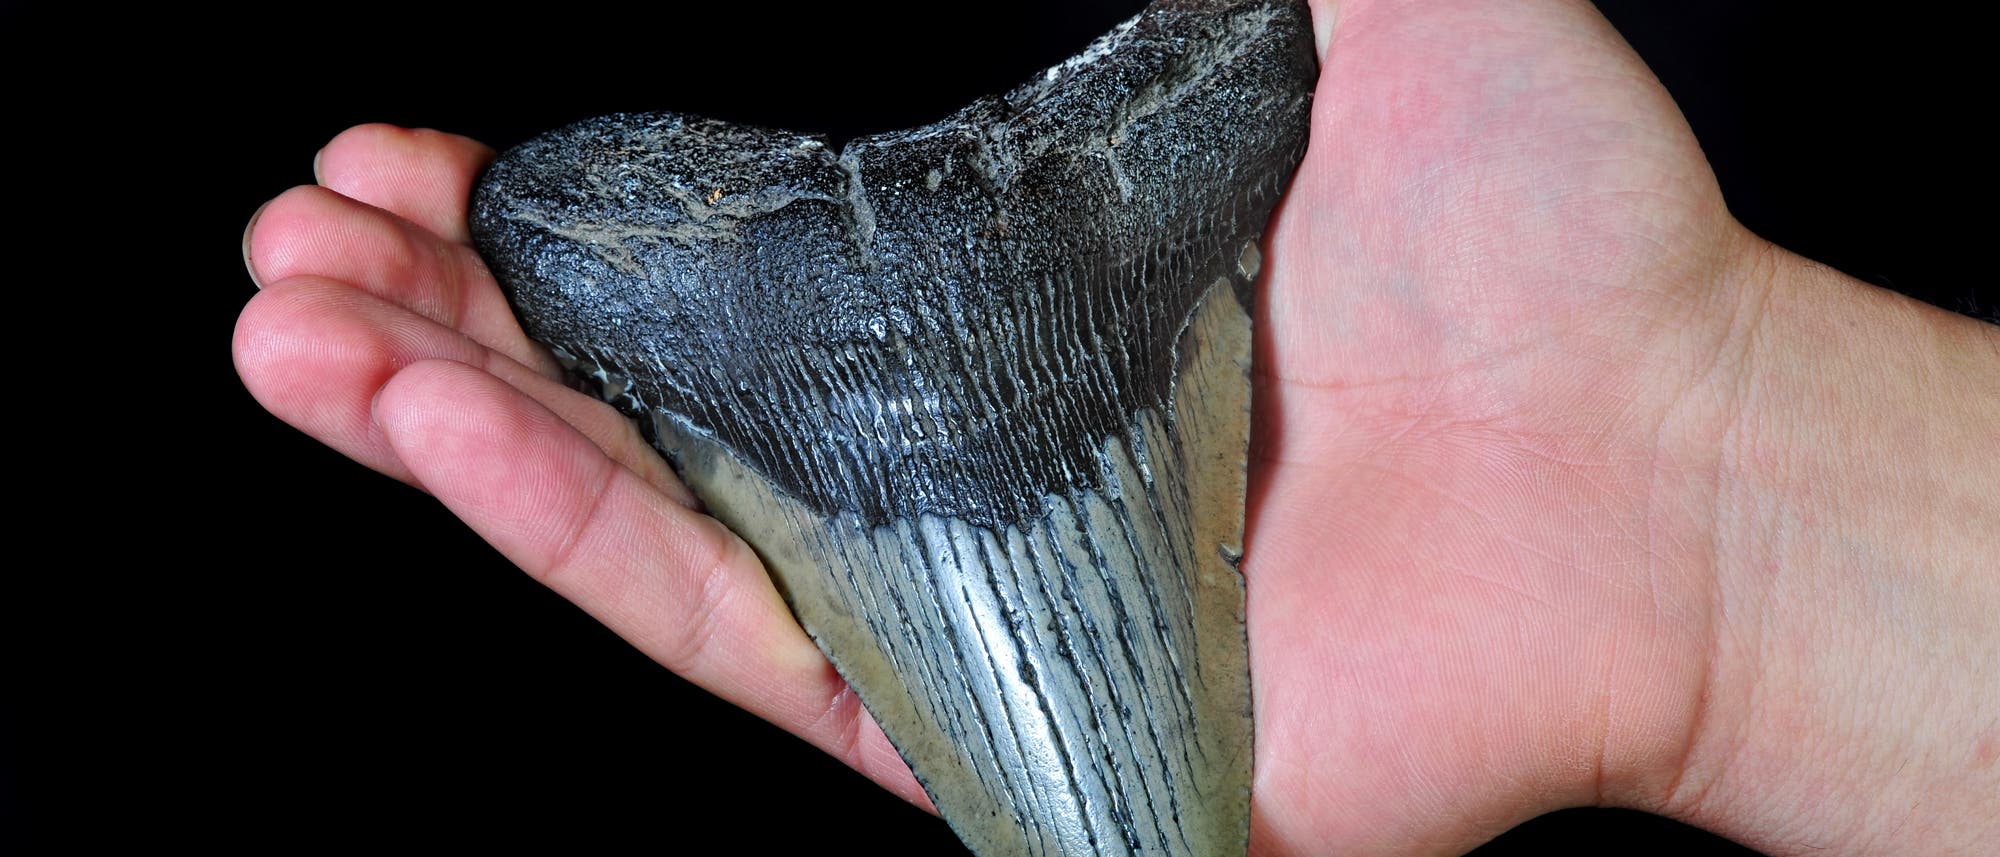 Fossiler Zahn des ausgestorbenen Riesenhais Megalodon